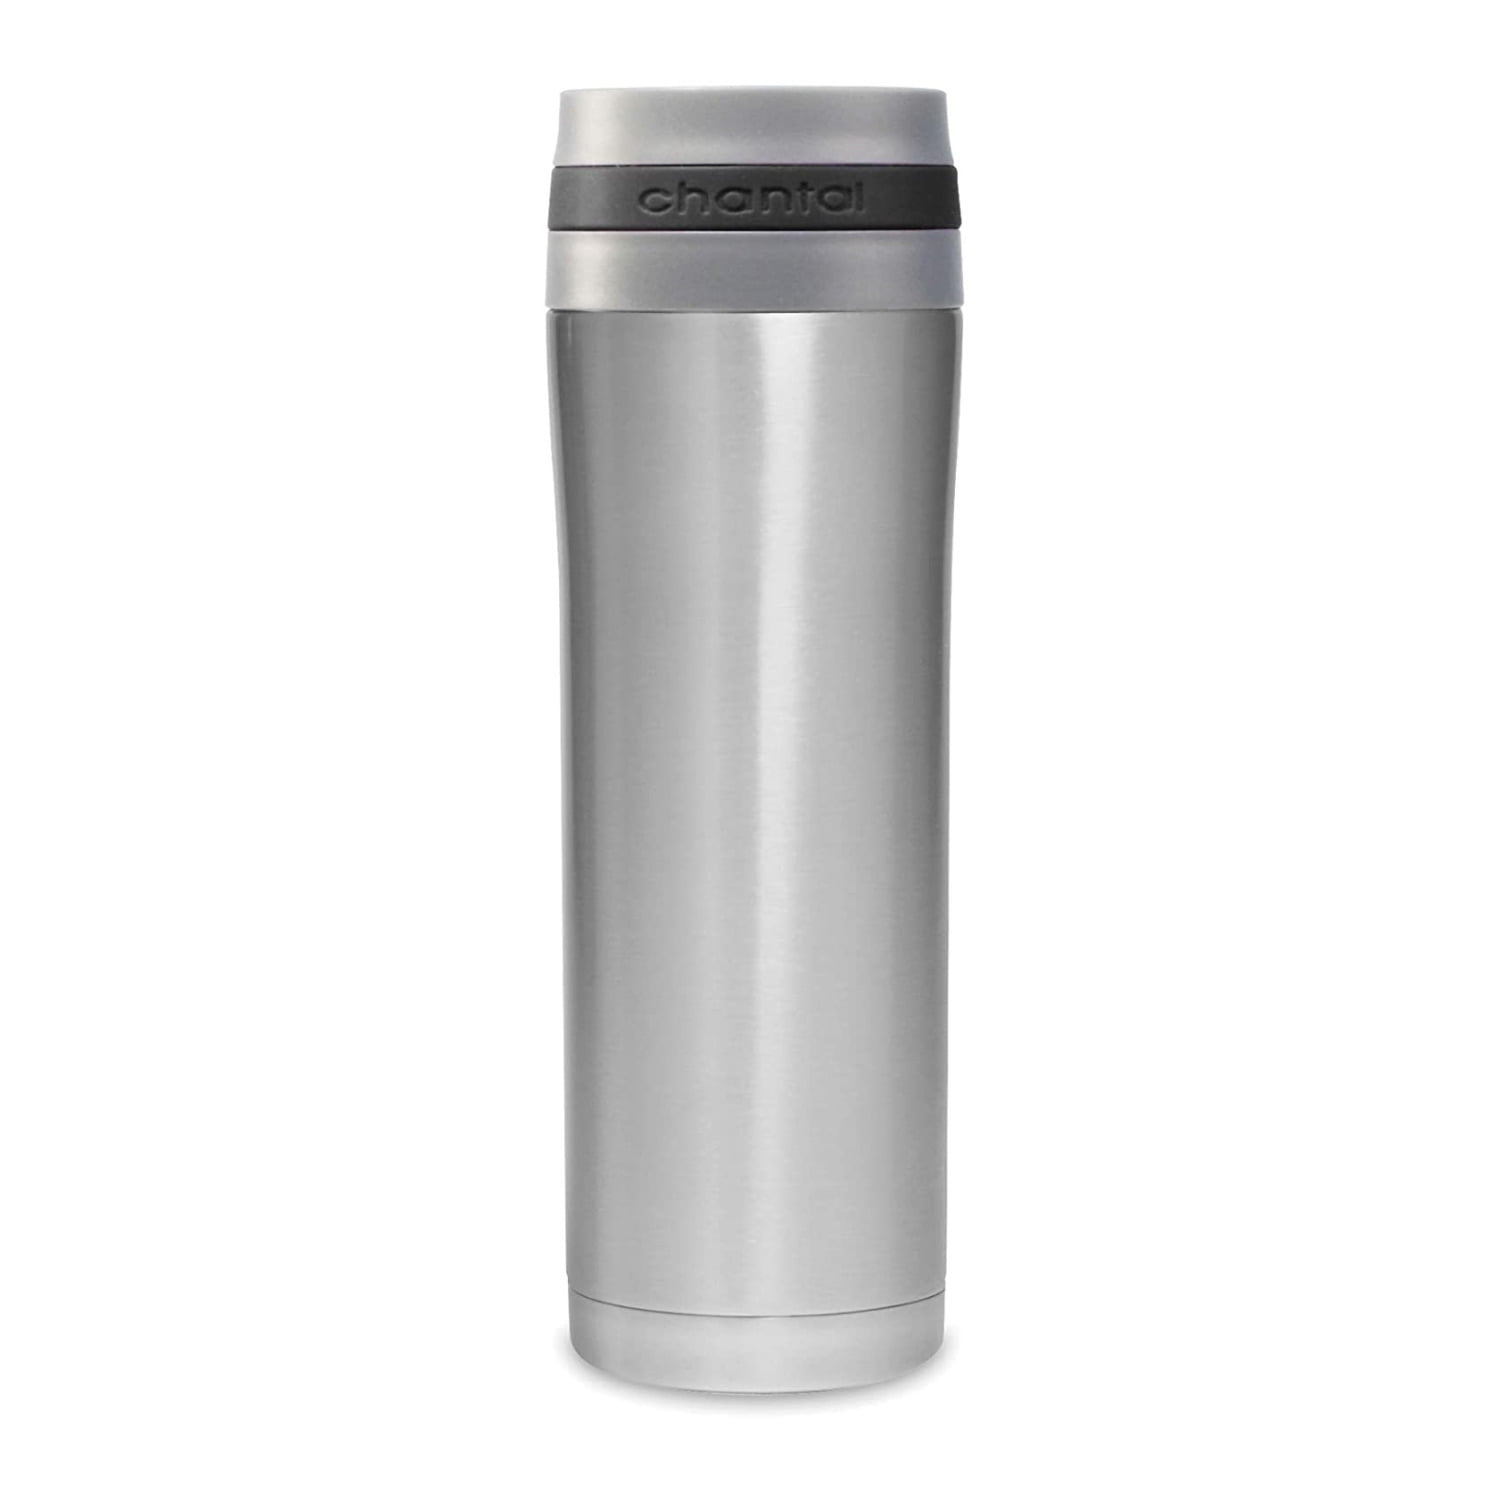 Better Dweller Vacuum-Sealed Metal Margarita Glass with Lid, Insulated  Tumbler Mug, Steel Cup for Va…See more Better Dweller Vacuum-Sealed Metal